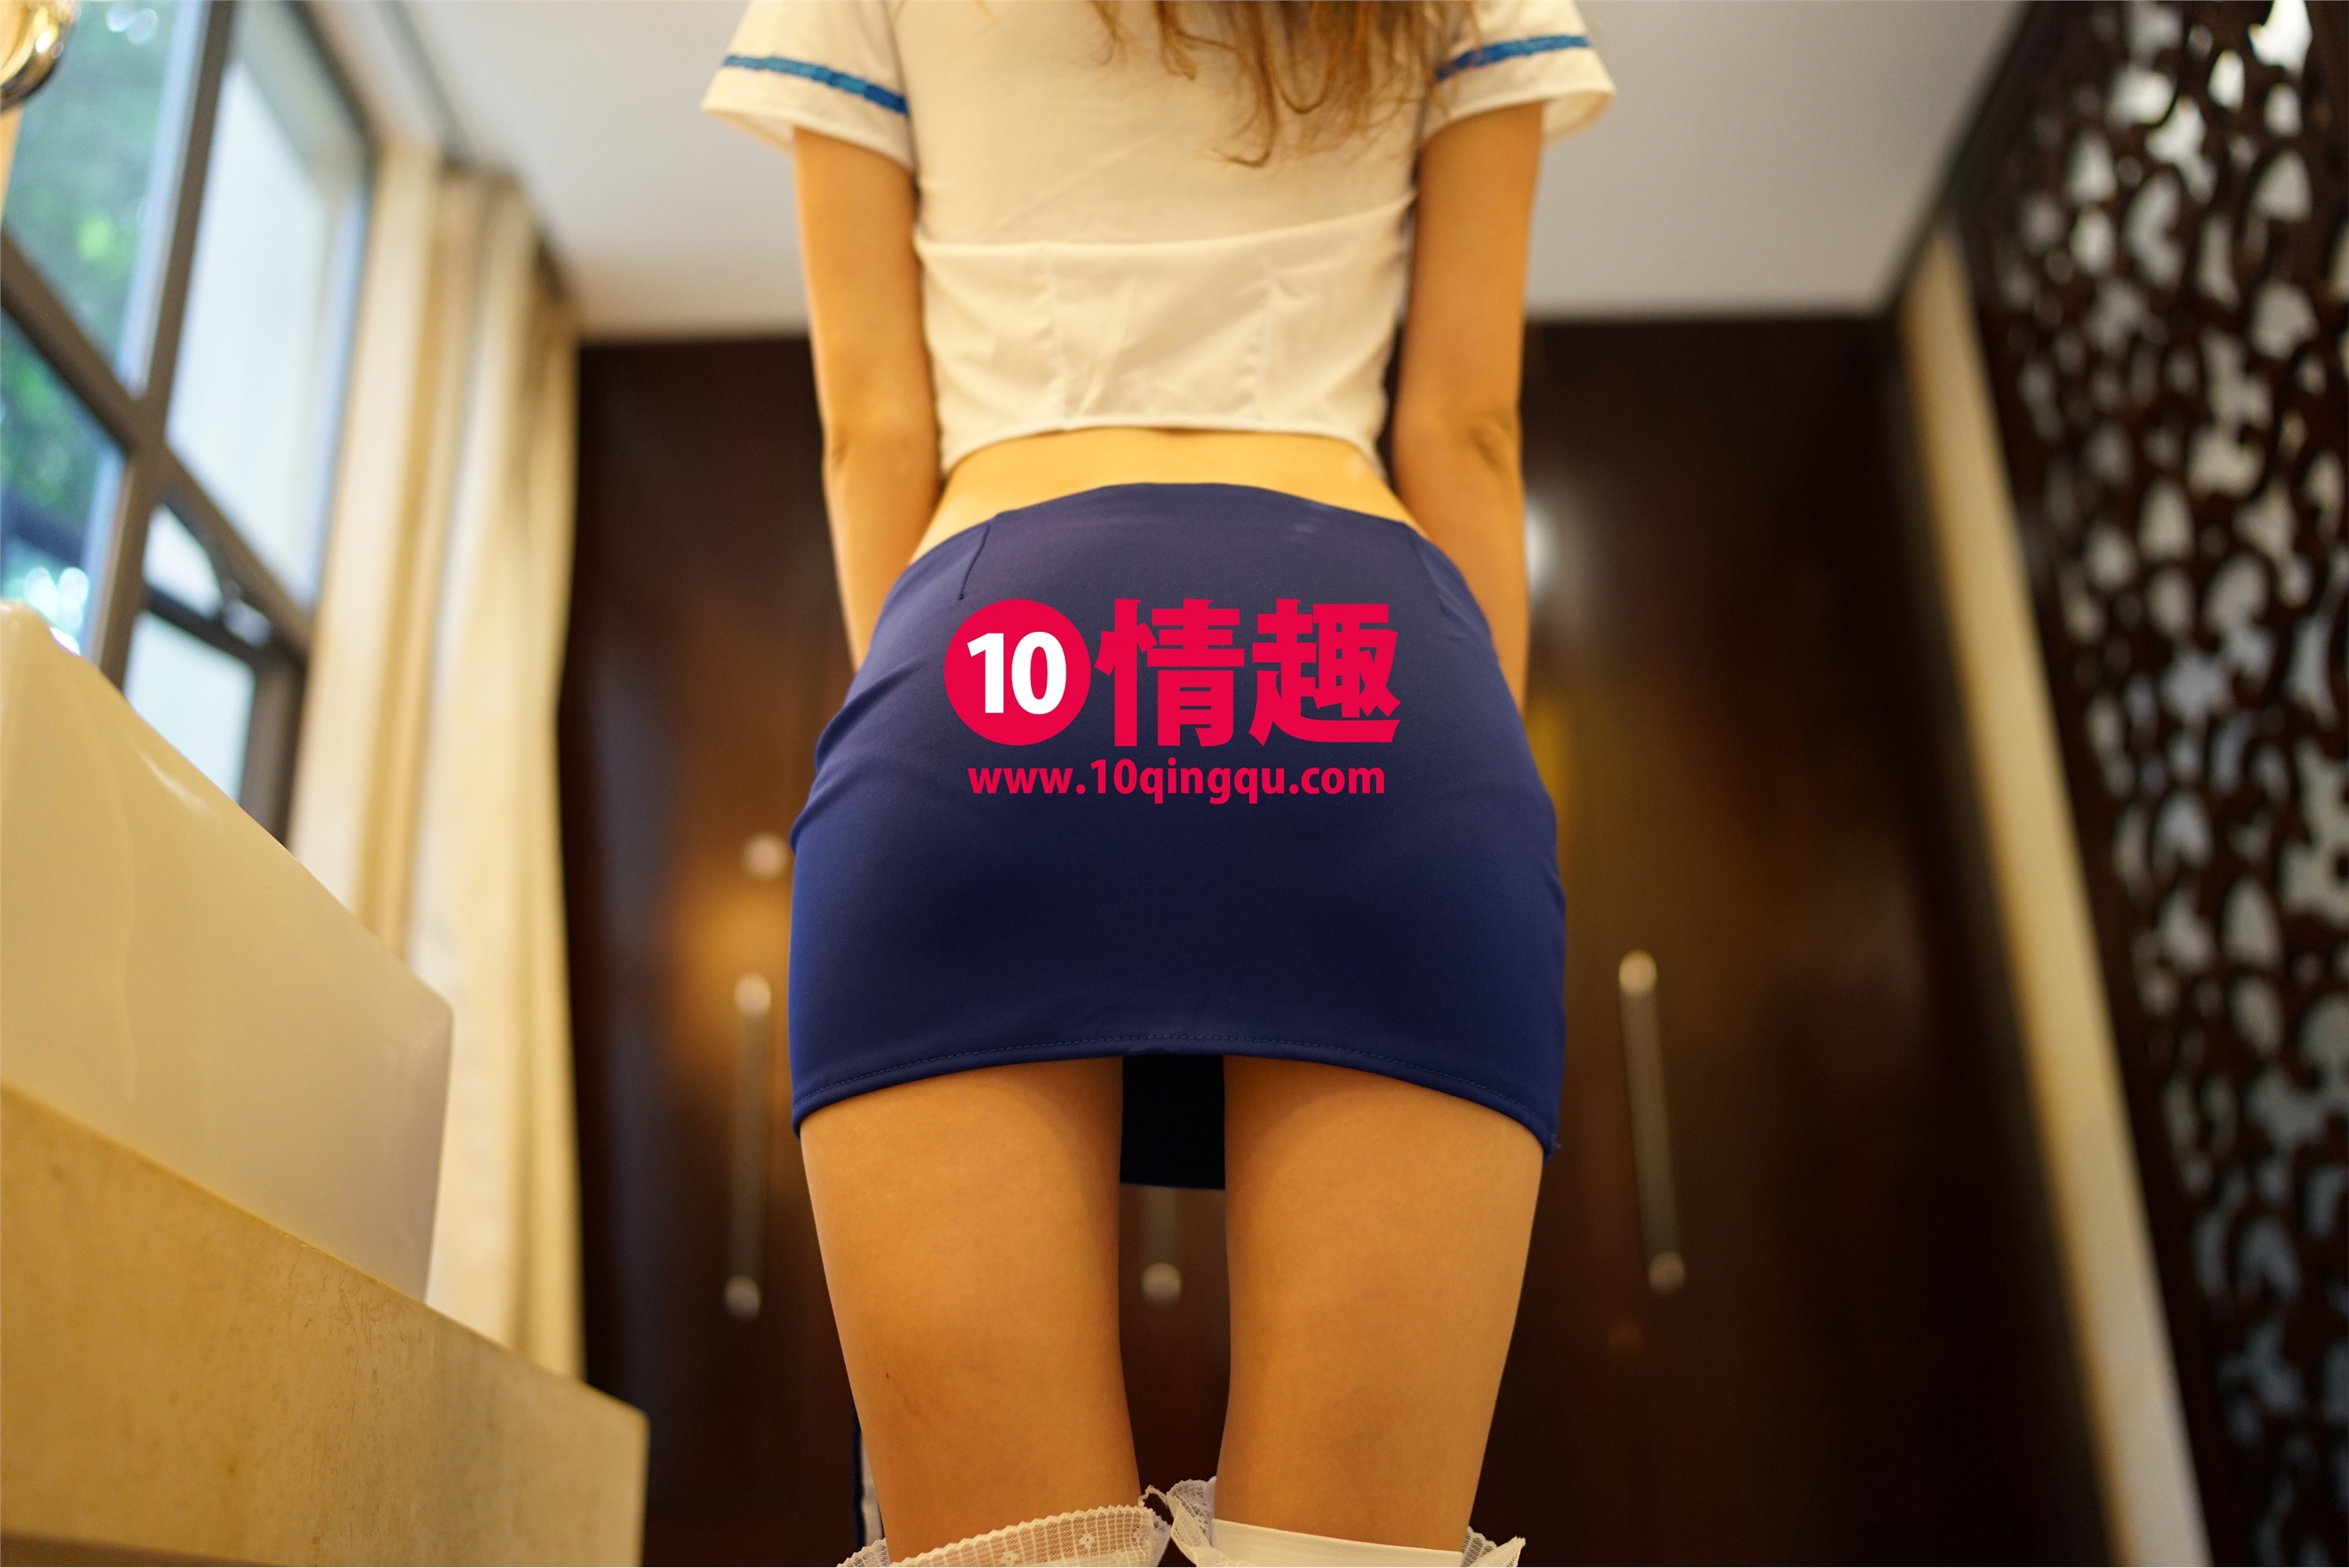 ROSI10 Fun 2015.05.27 No.010 Air hostess uniform set